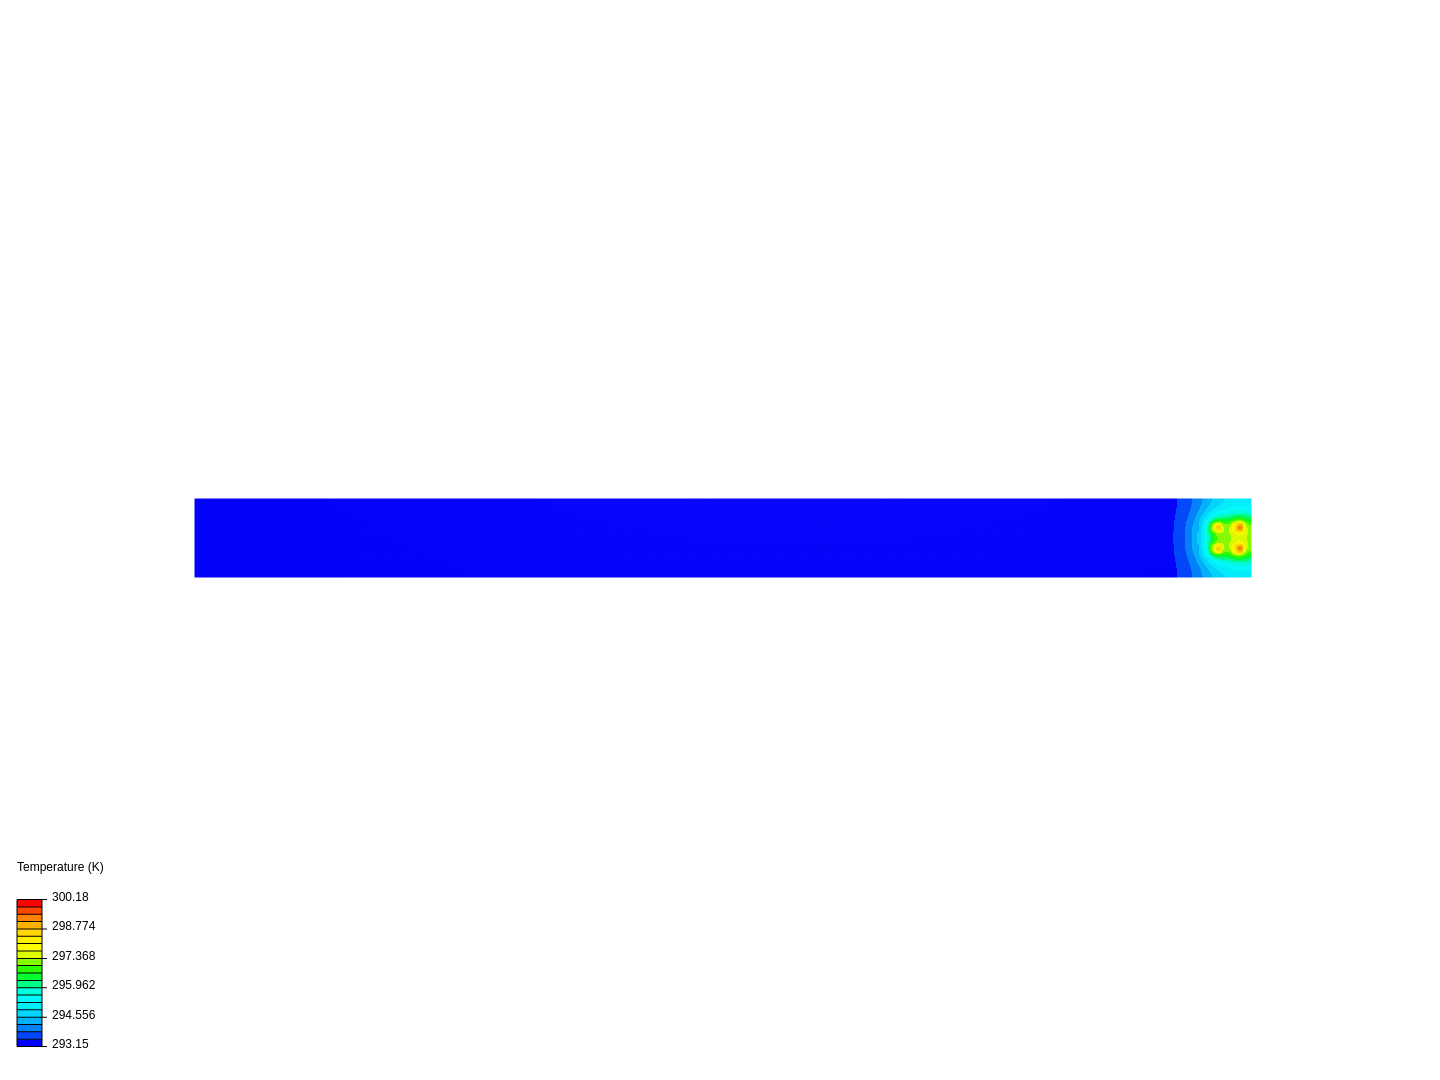 LED thermal simulation image